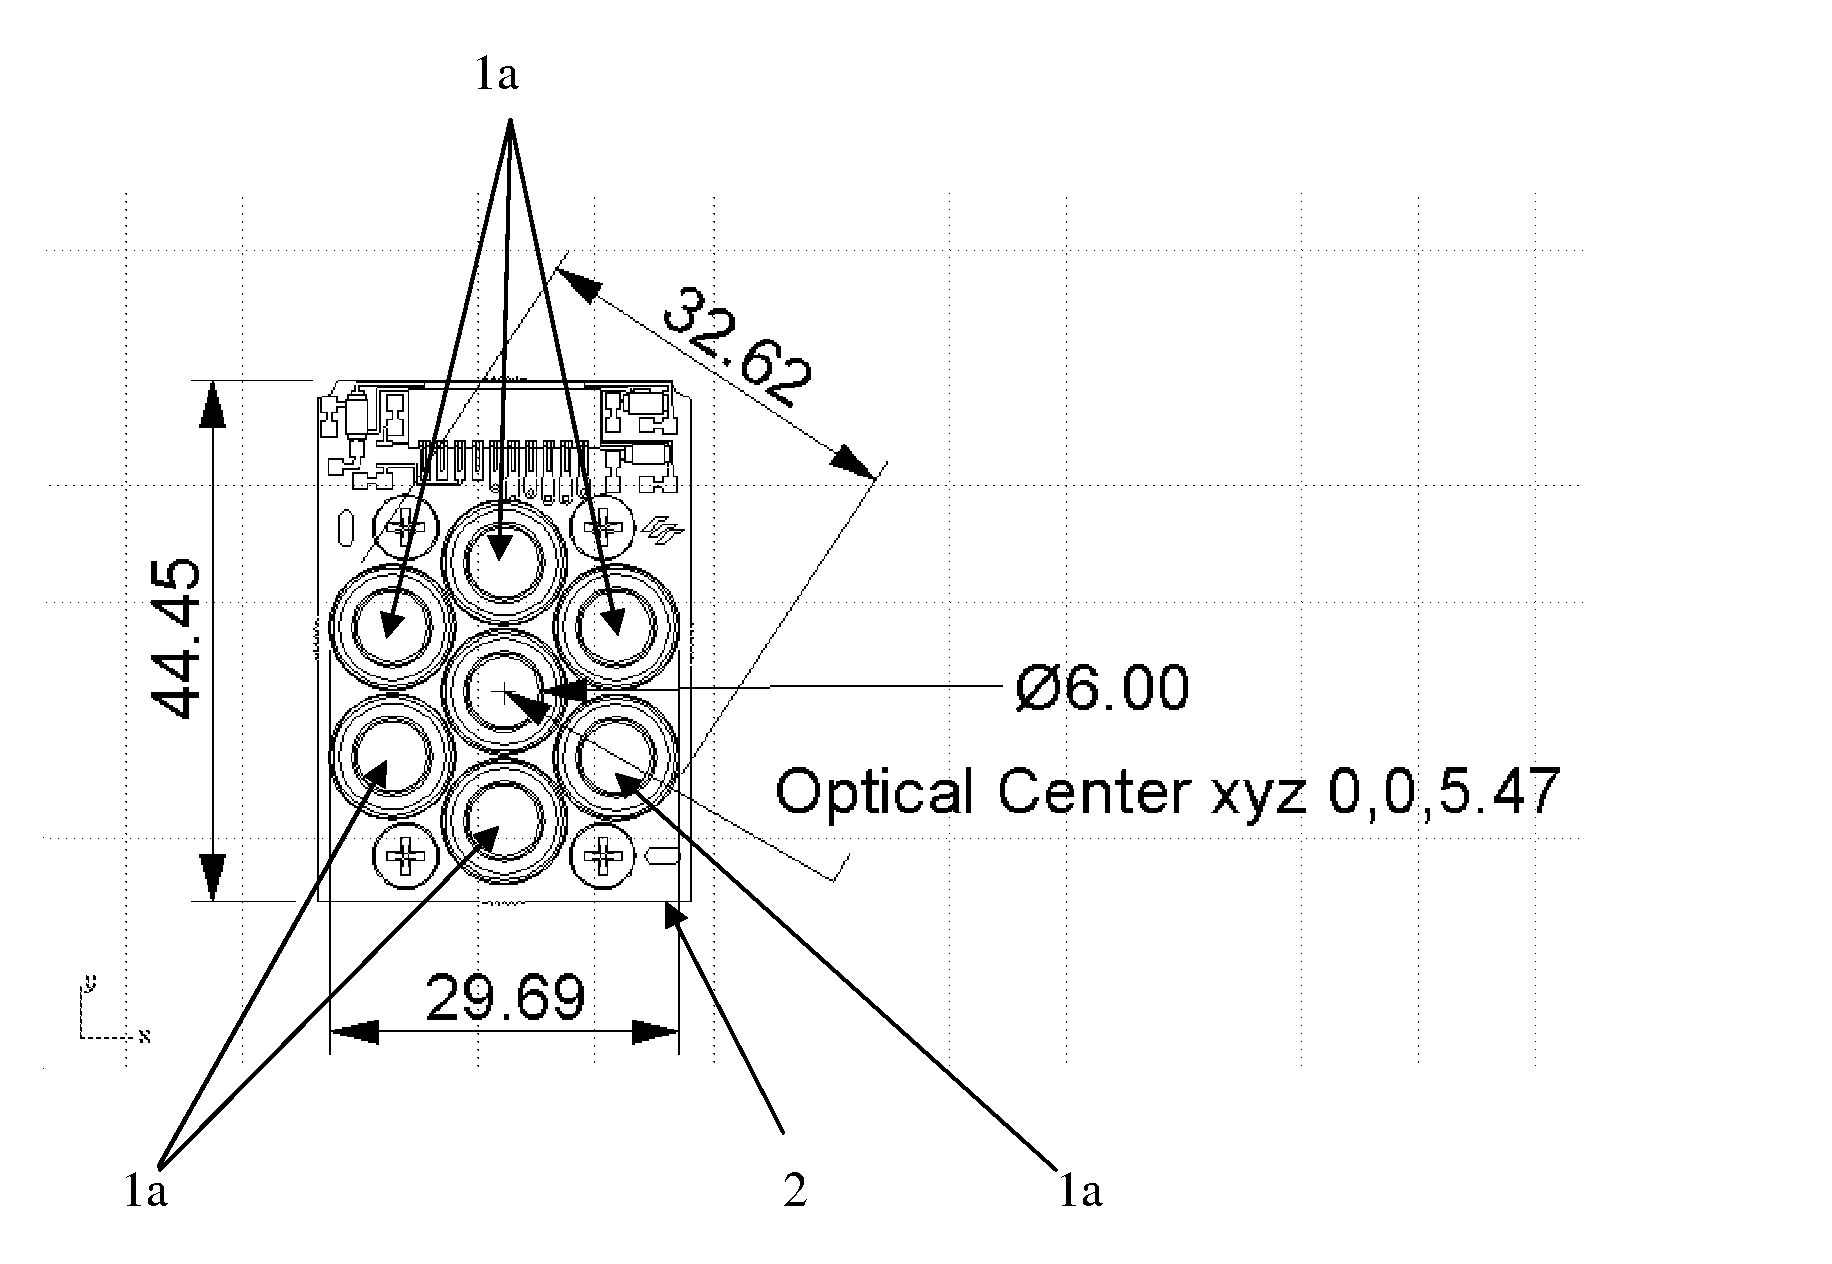 Folded light path LED array collimation optic